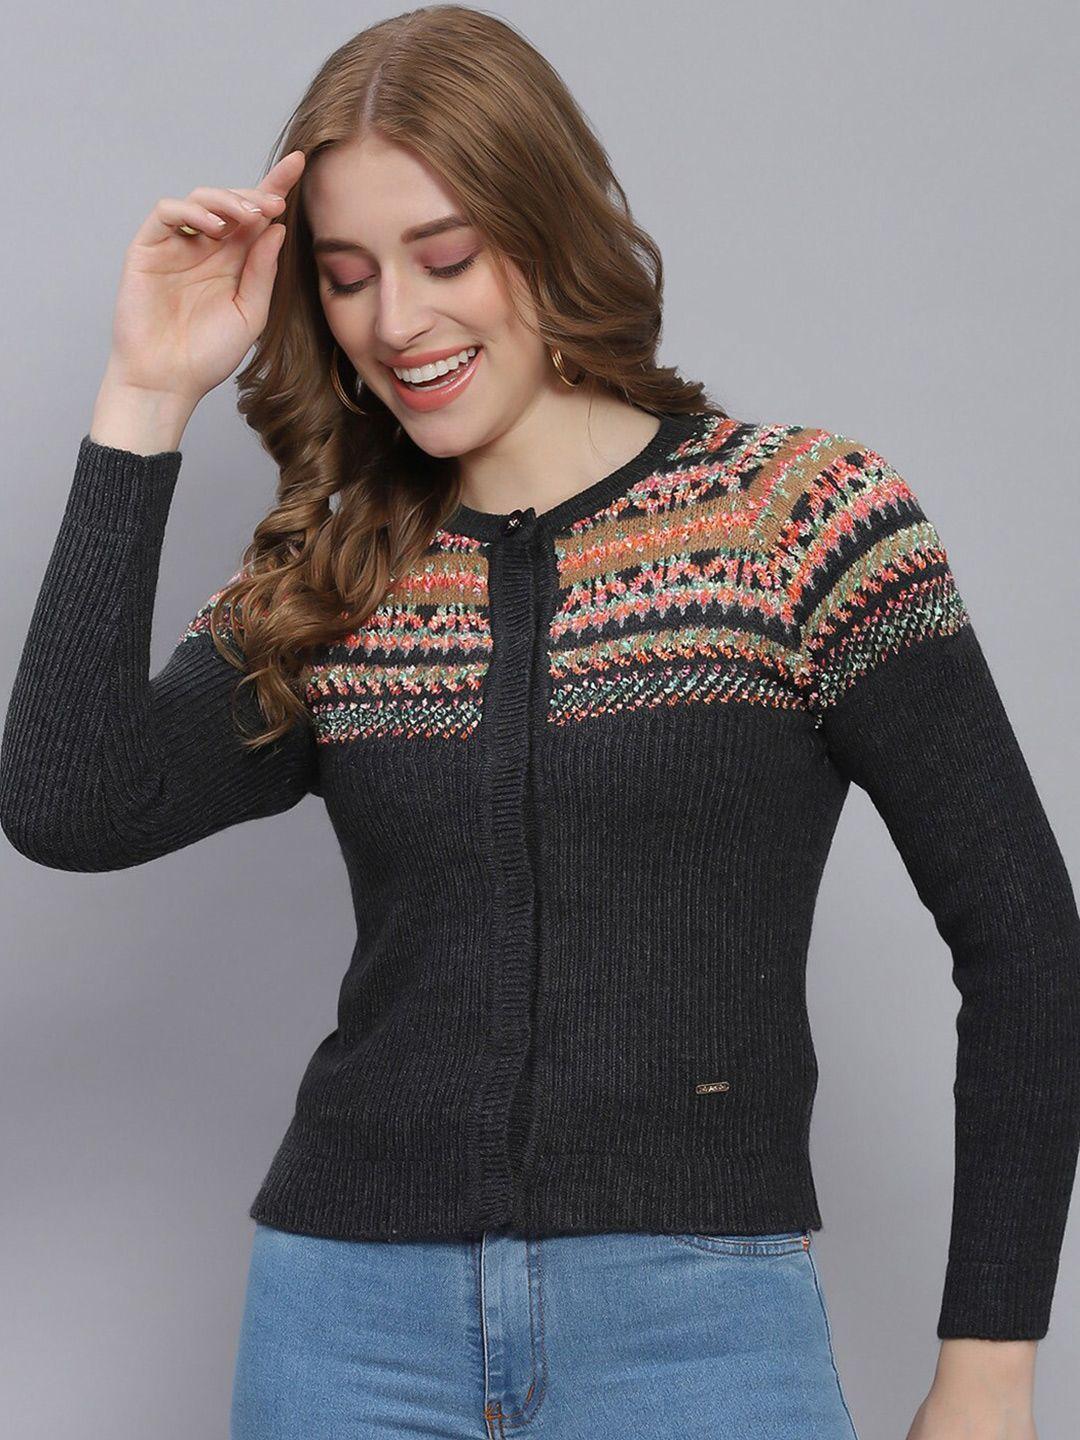 monte carlo self design woolen cardigan sweater